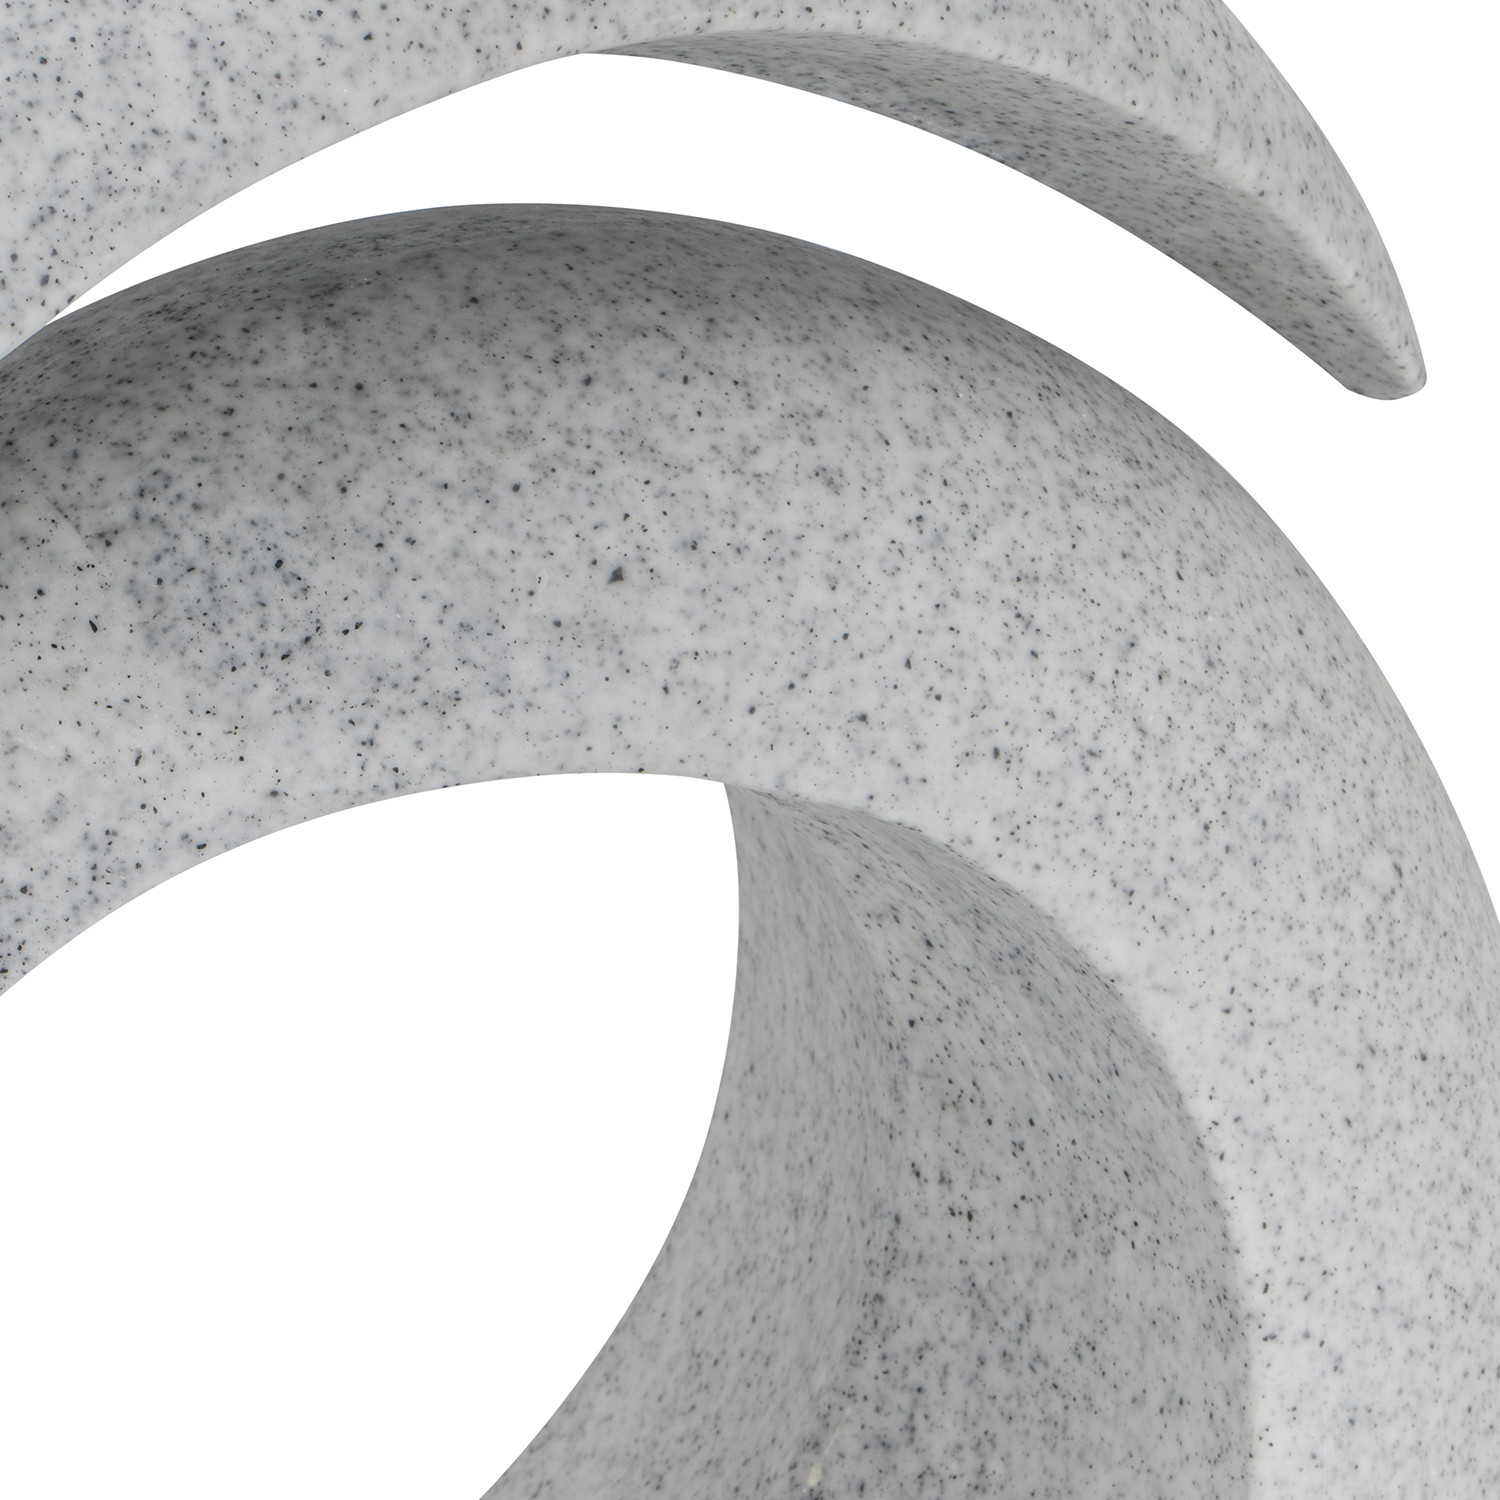 Enigma Revolve Granite Marble and Resin Decorative Sculpture Image 3